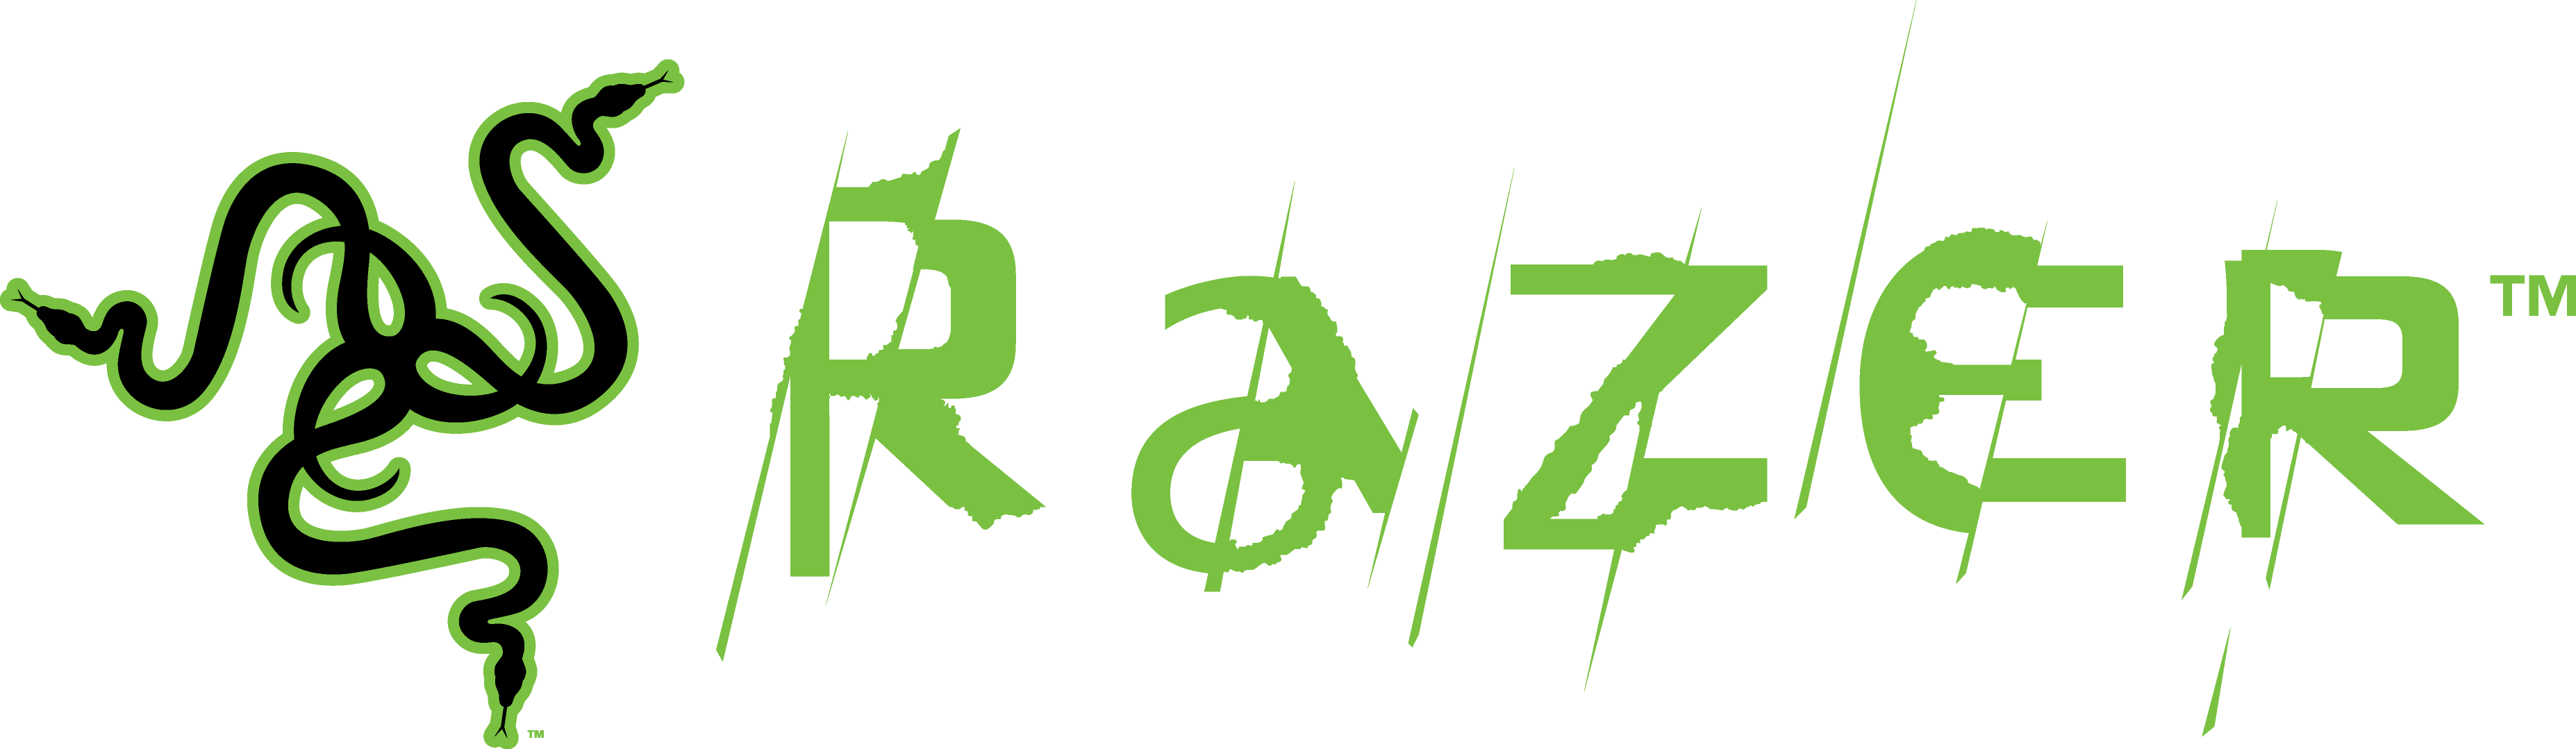 Brandy Form Razer Signature Logotype PNG